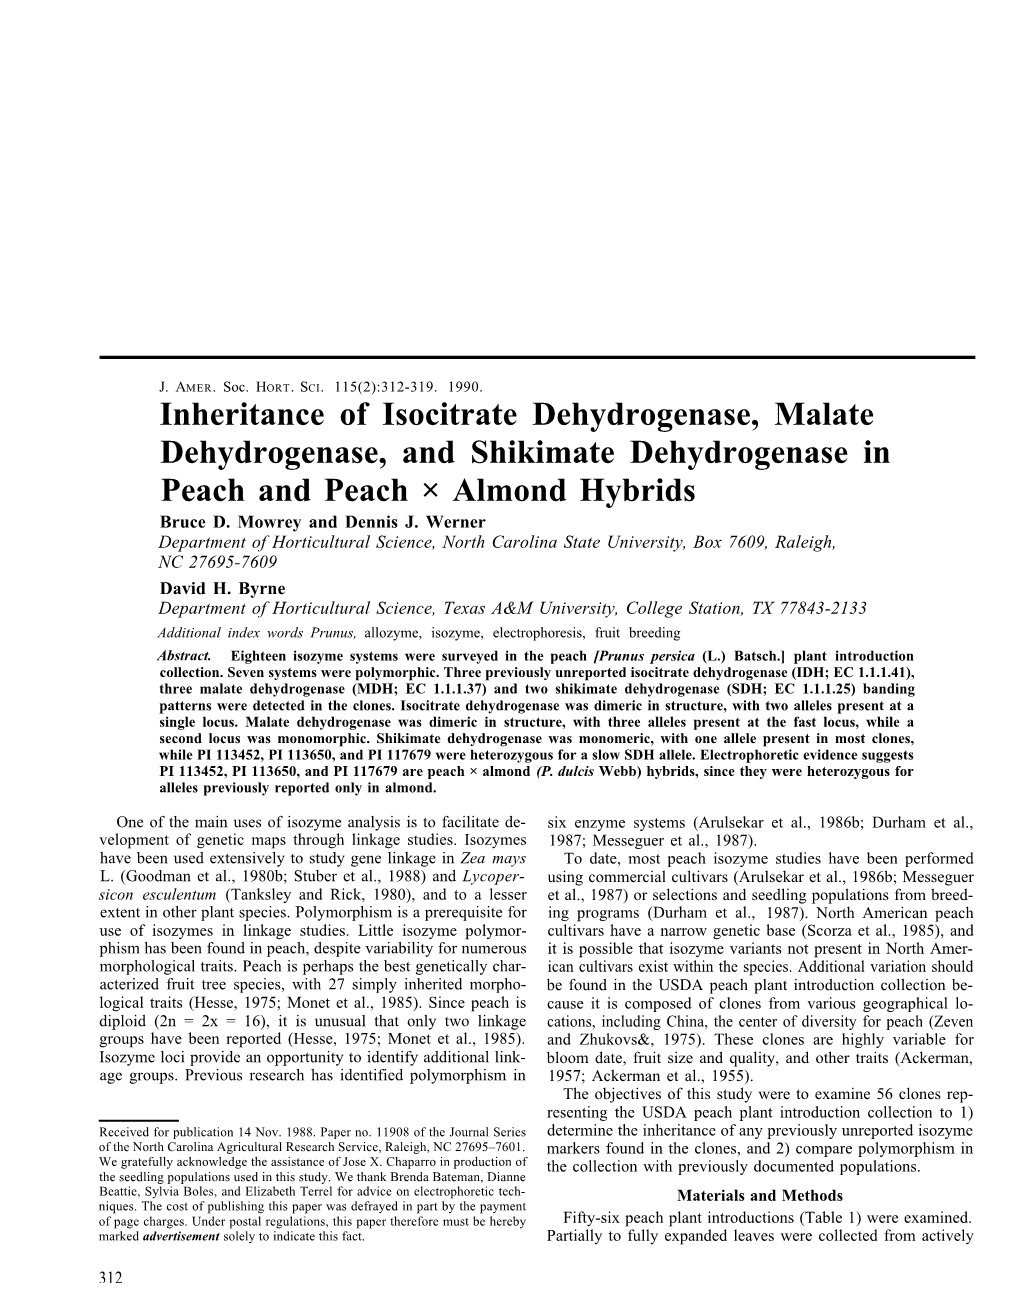 "Inheritance of Isocitrate Dehydrogenase, Malate